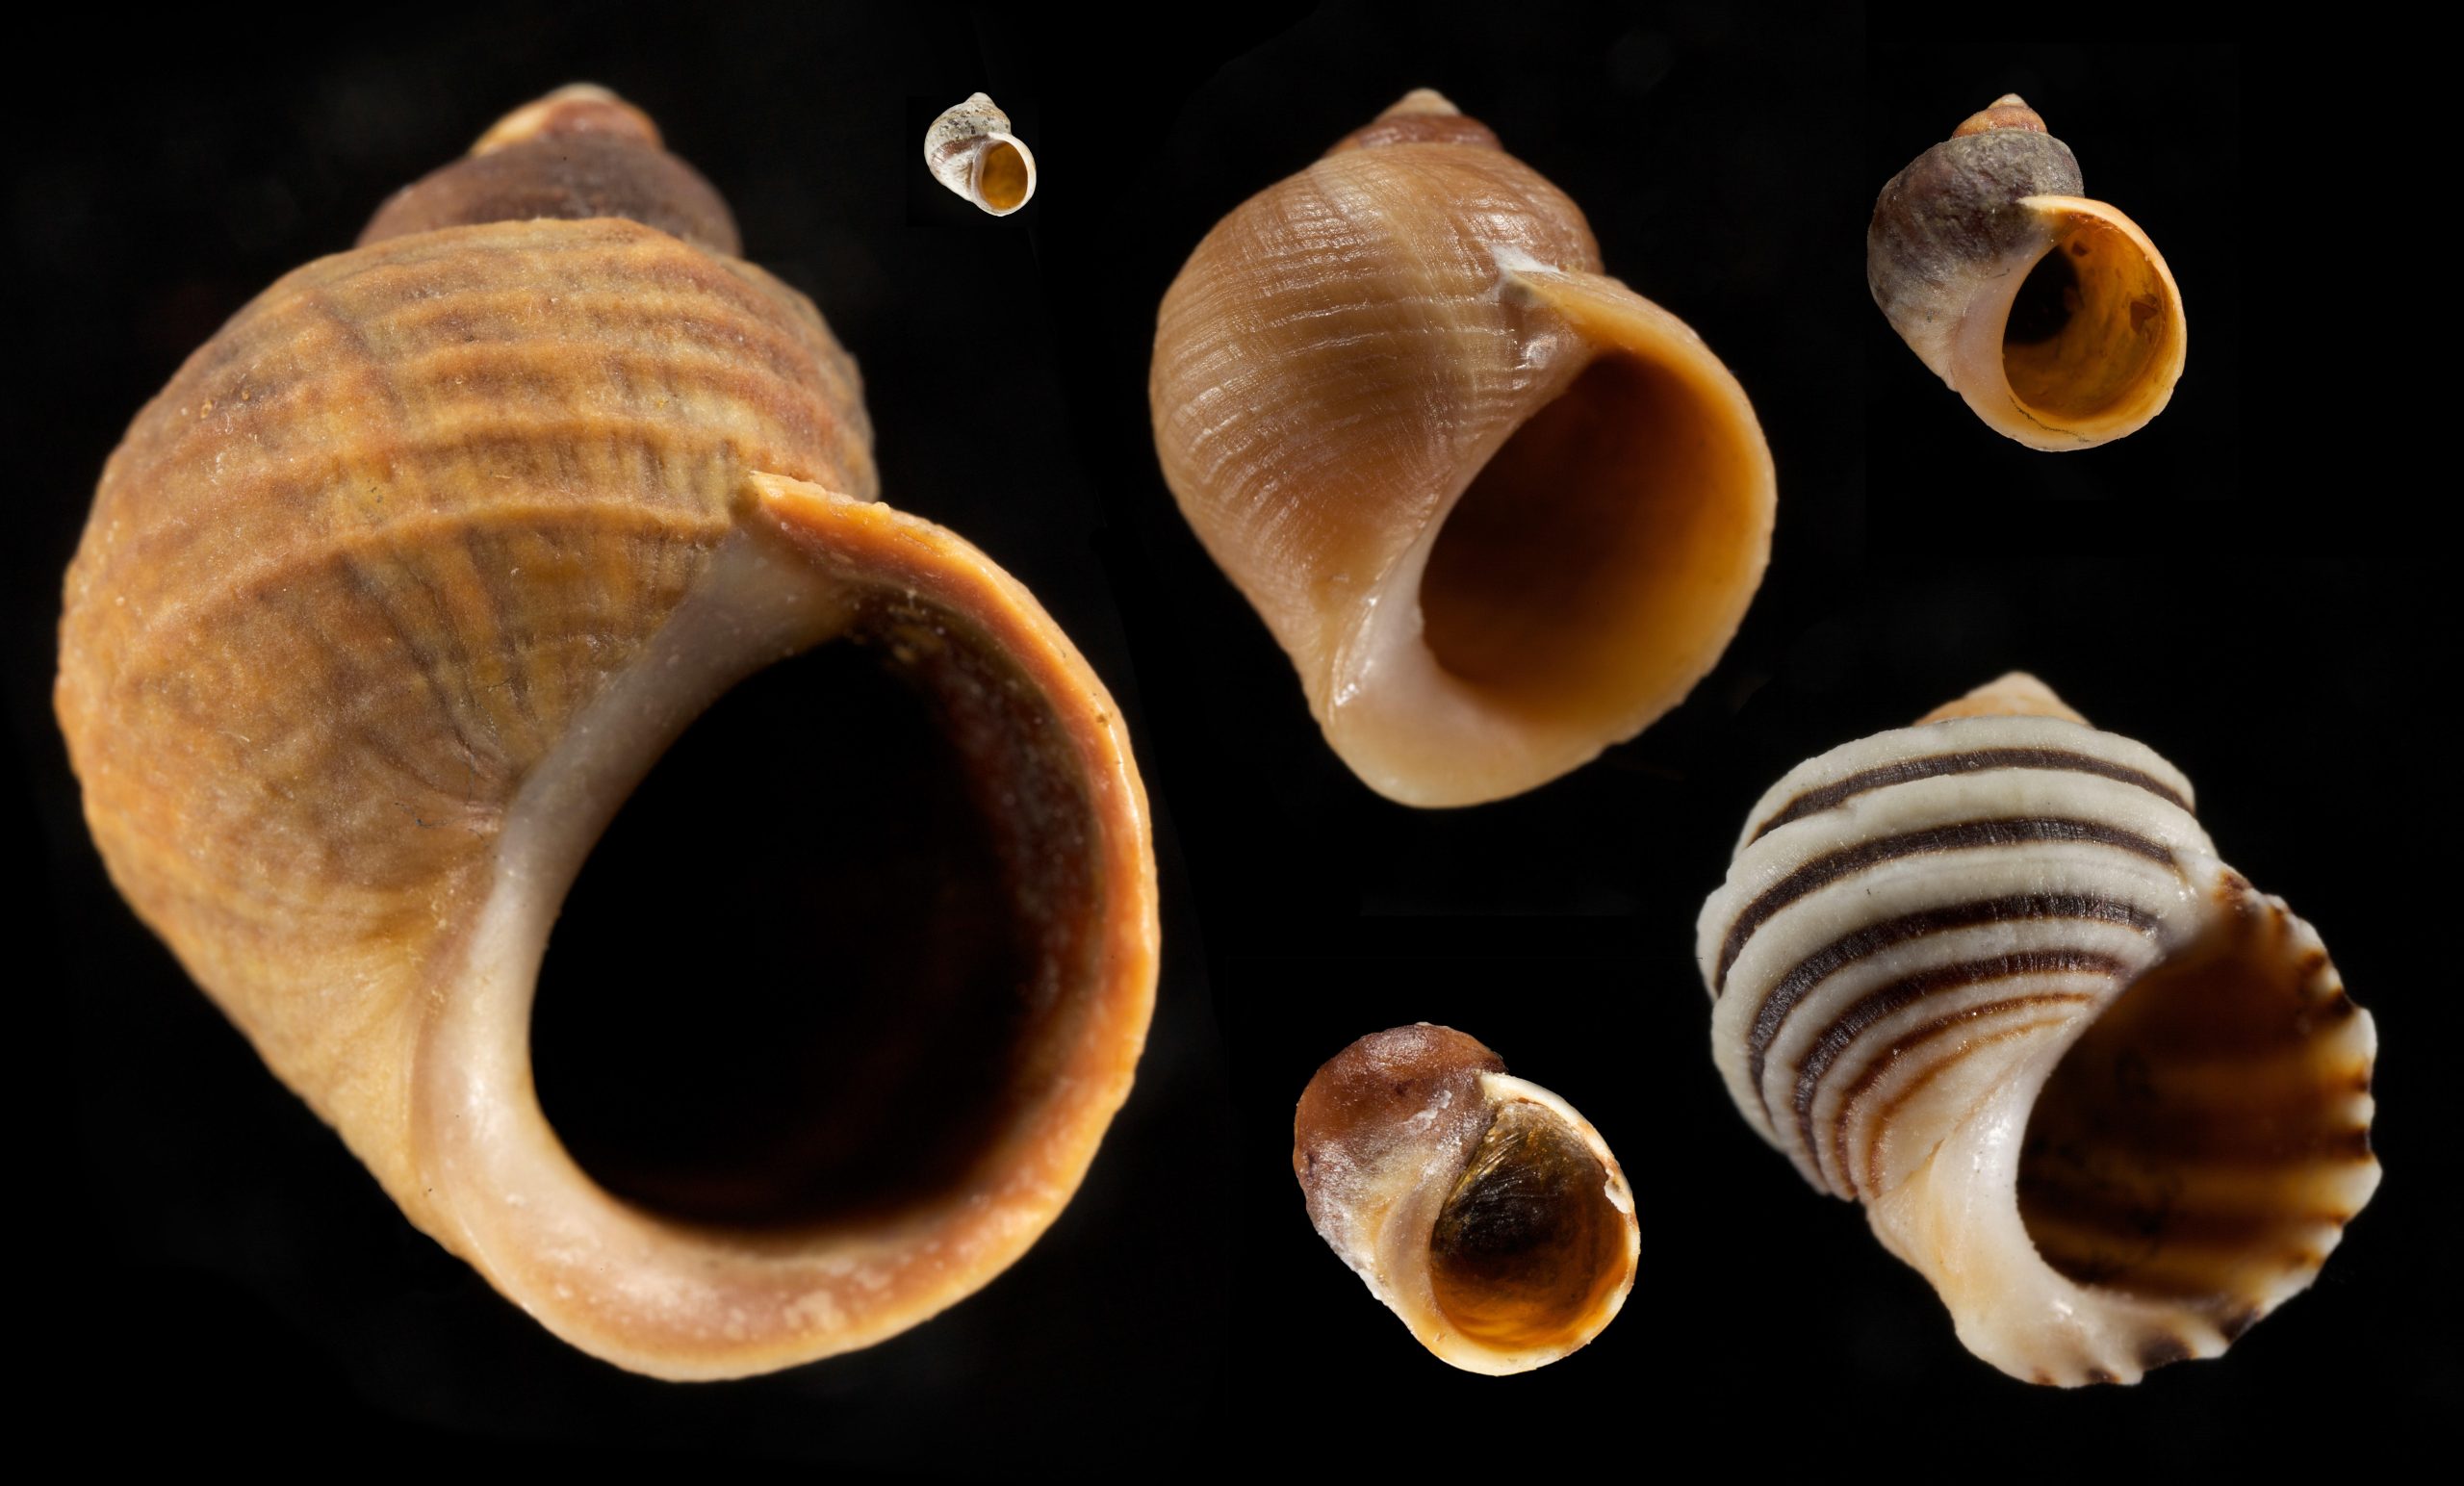 Littorina-Snails-scaled.jpg